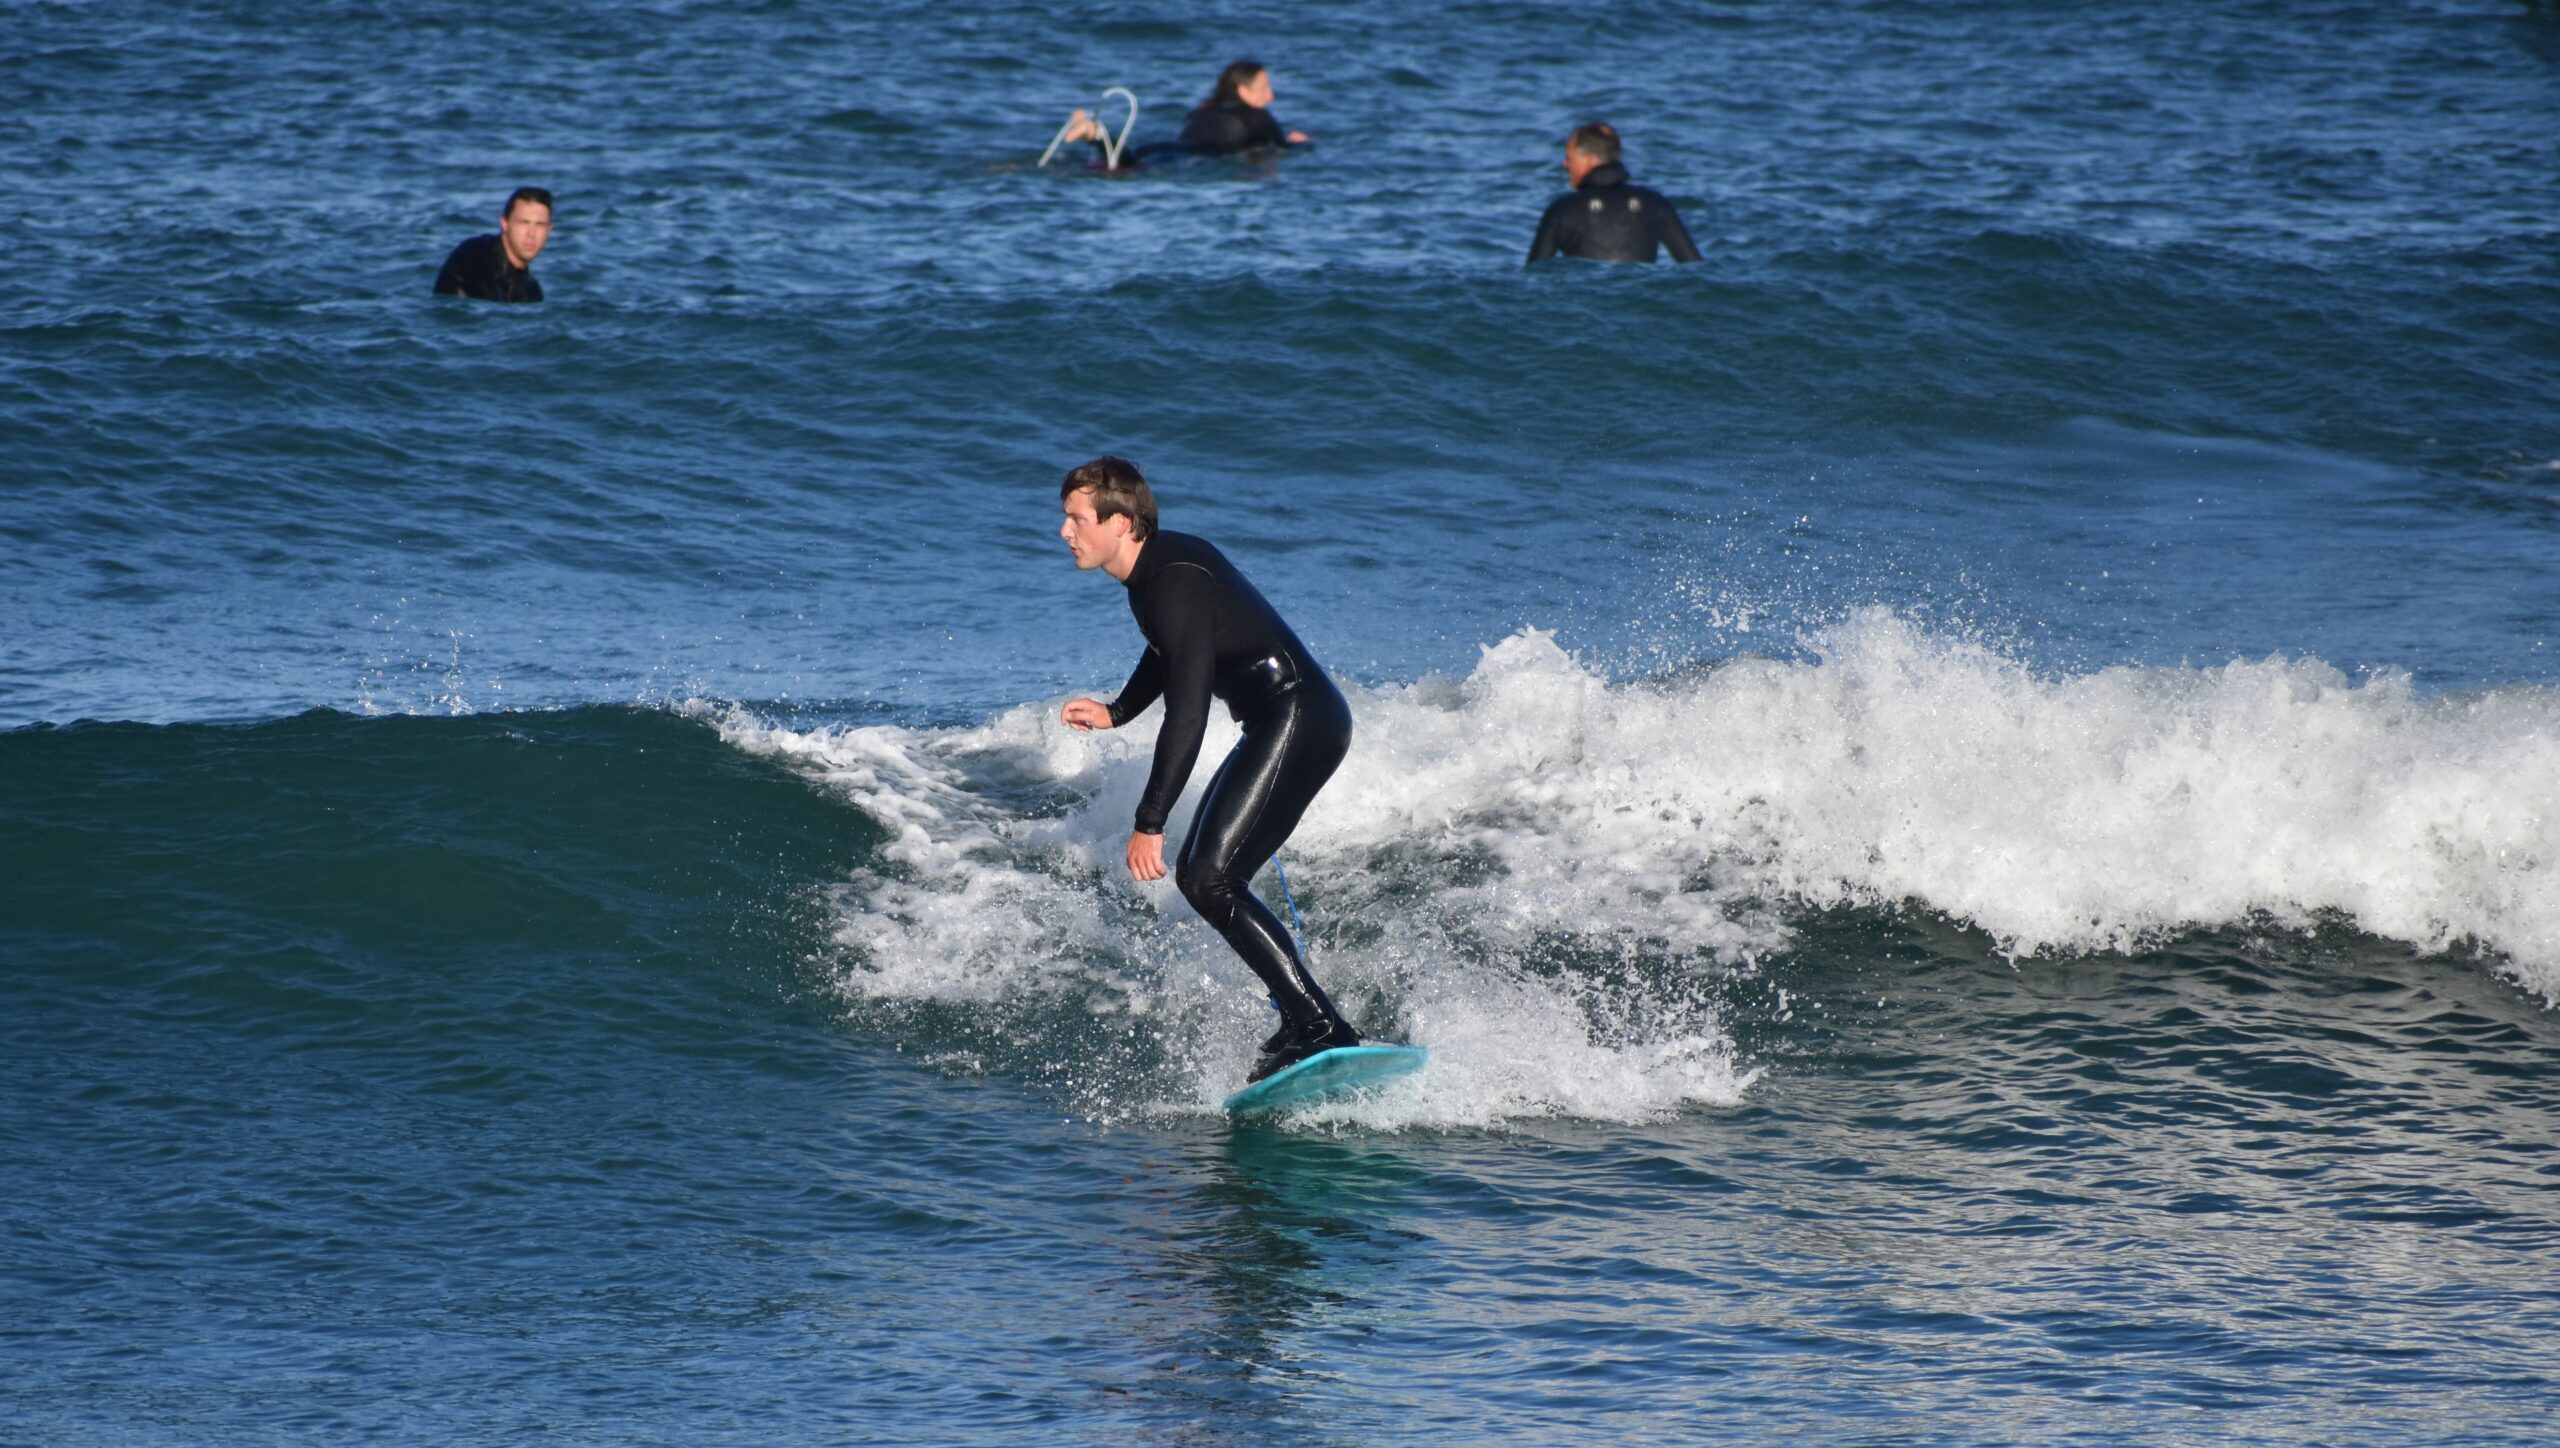 Jackson Prudhon riding a wave next to Morro Rock.